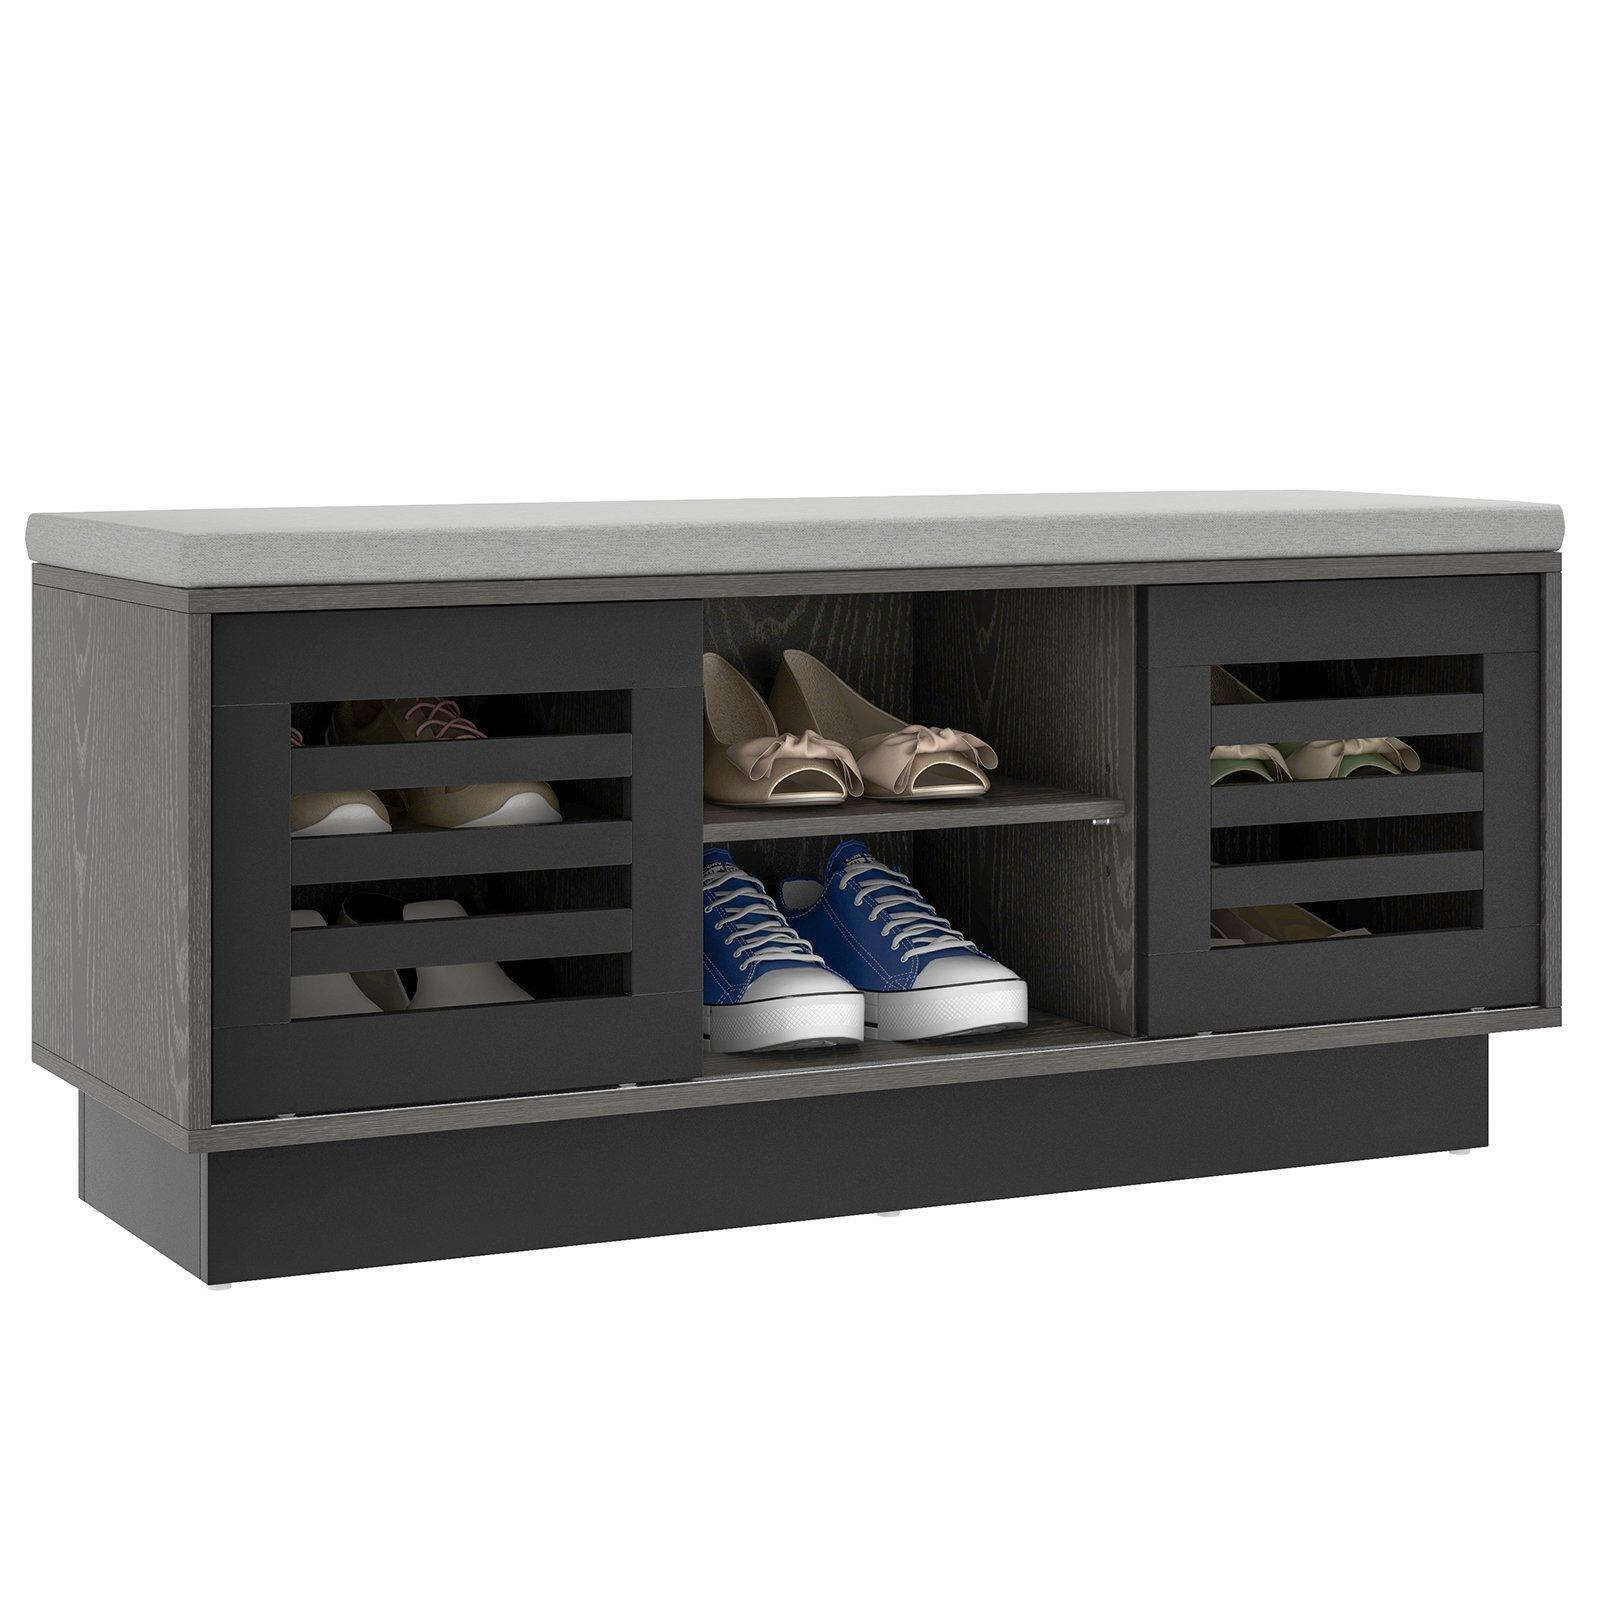 Shoe Rack Storage Bench Organizer W/Cushion Adjustable Shelf Slide Door Grey - image 1